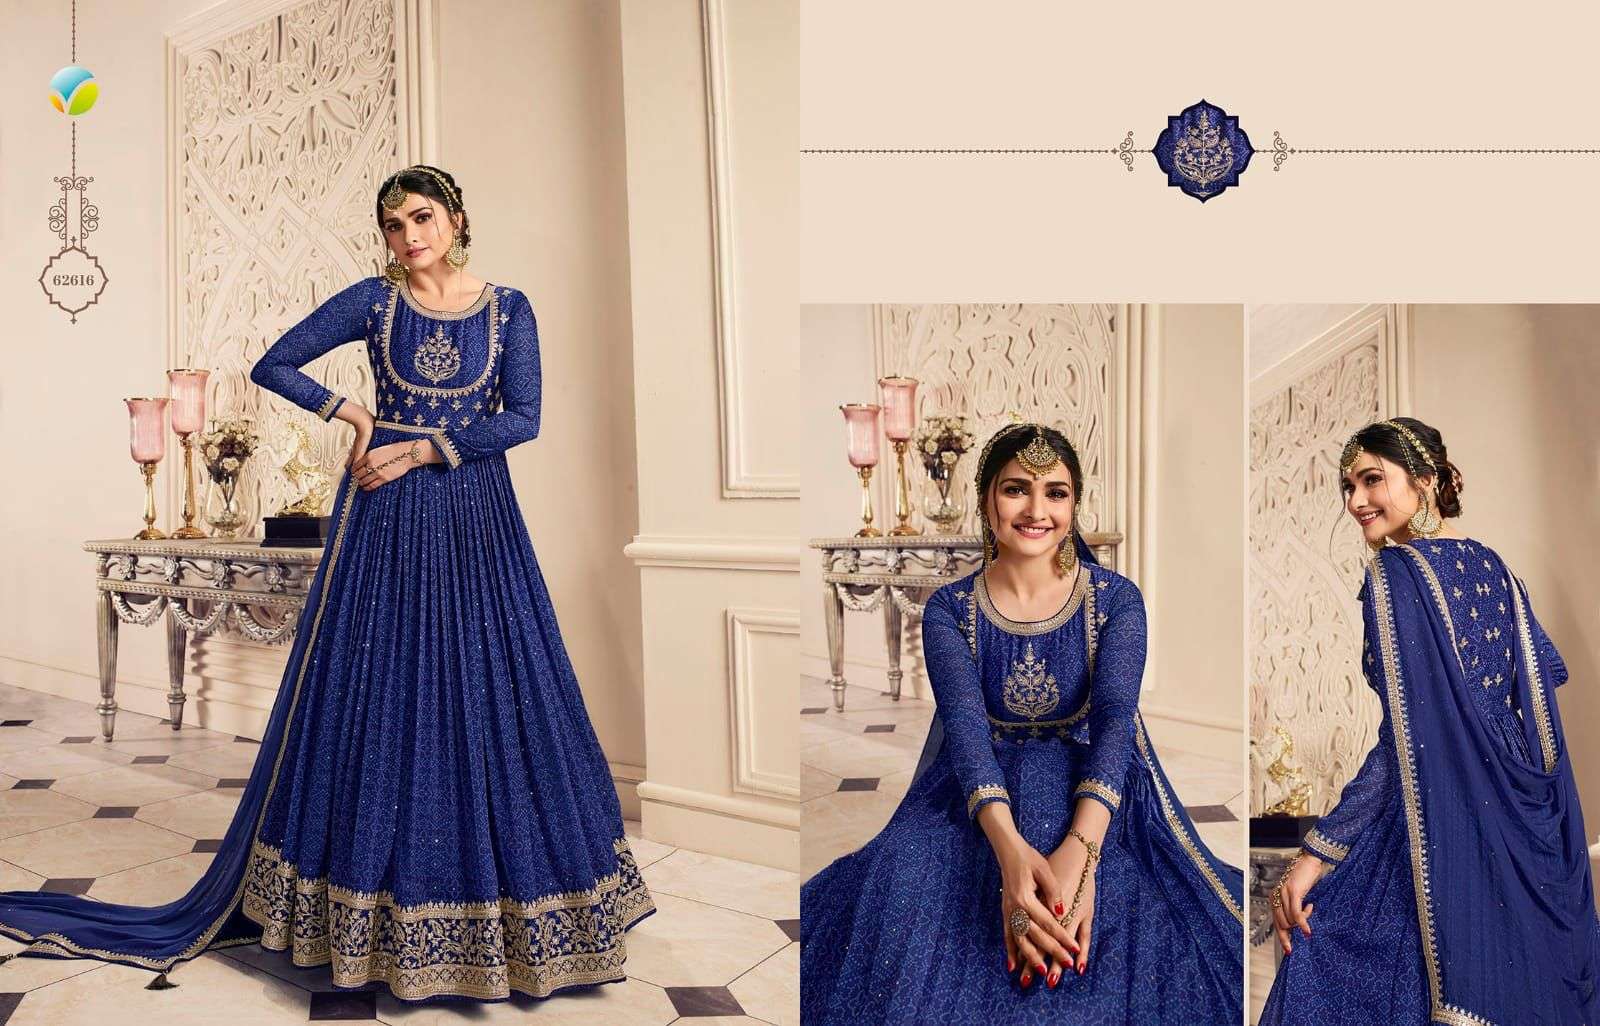 Kaseesh Gunjita By Vinay Fashion 62611 To 62616 Series Beautiful Anarkali Suits Colorful Stylish Fancy Casual Wear & Ethnic Wear Chiffon Silk Dresses At Wholesale Price